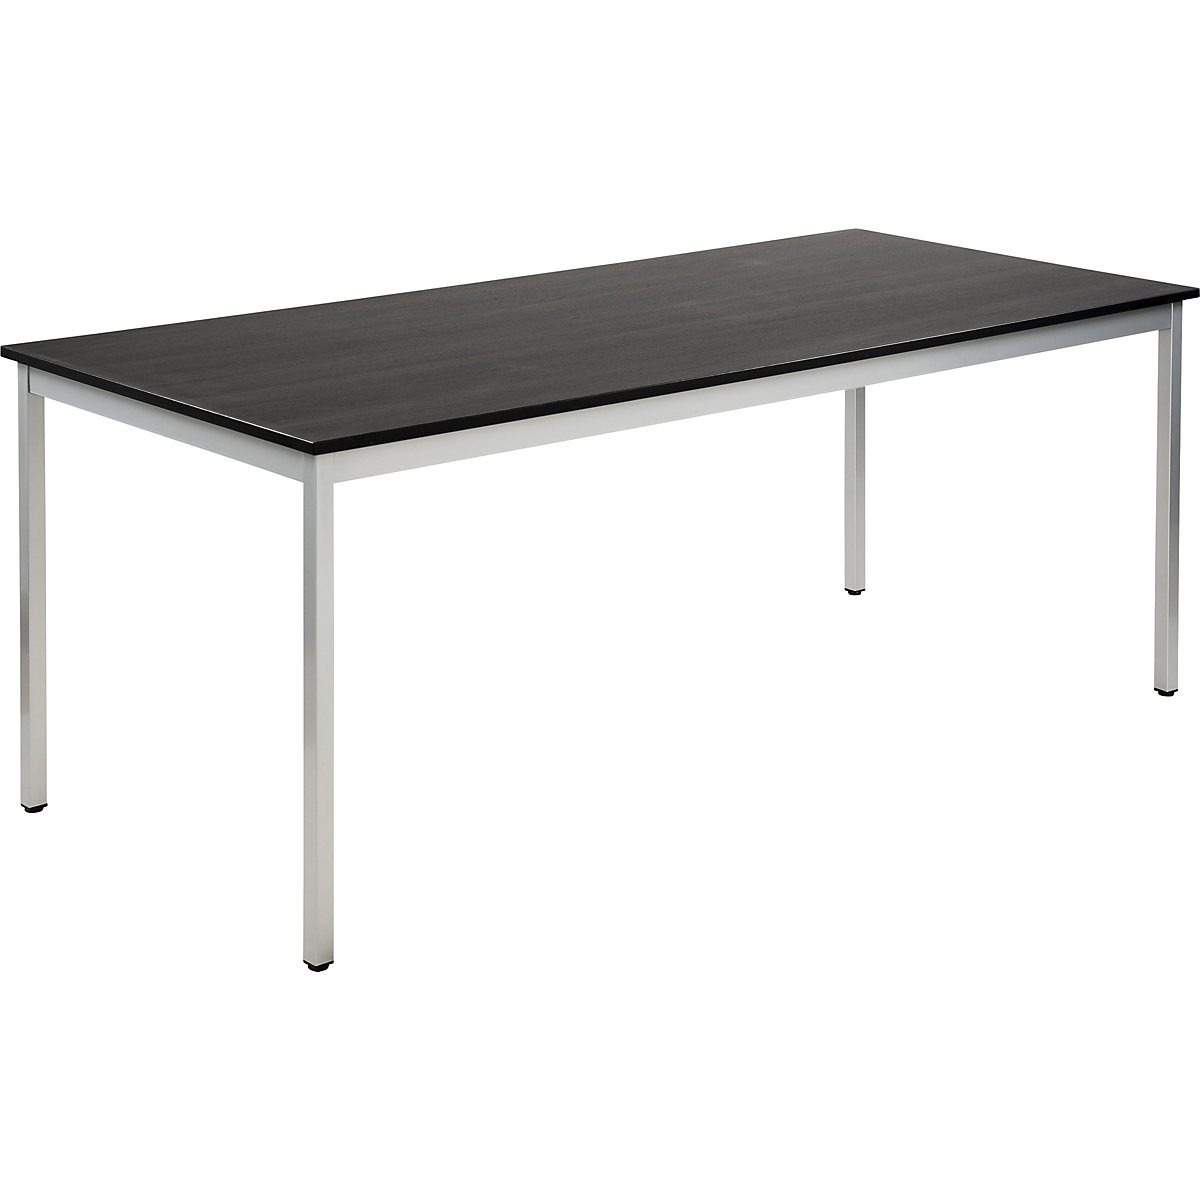 Višenamjenski stol – eurokraft basic, pravokutna izvedba, VxŠxD 740 x 1800 x 800 mm, ploča u imitaciji jasena u tamnosivoj boji, postolje u aluminij bijeloj boji-16